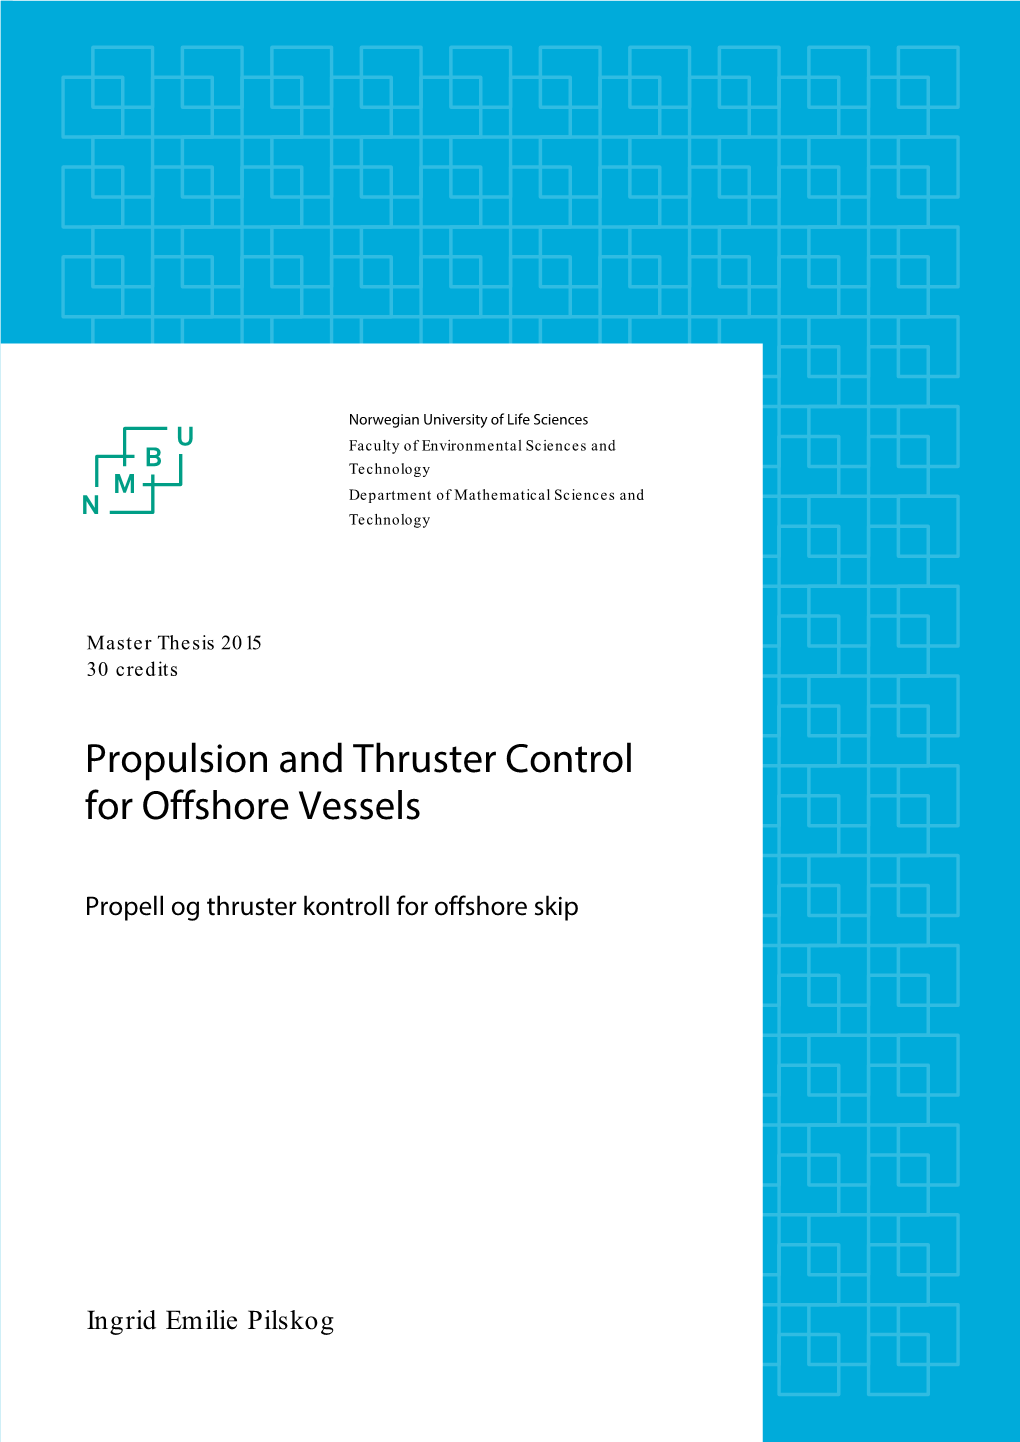 Propulsion and Thruster Control for Offshore Vessels” by Ingrid Emilie Pilskog